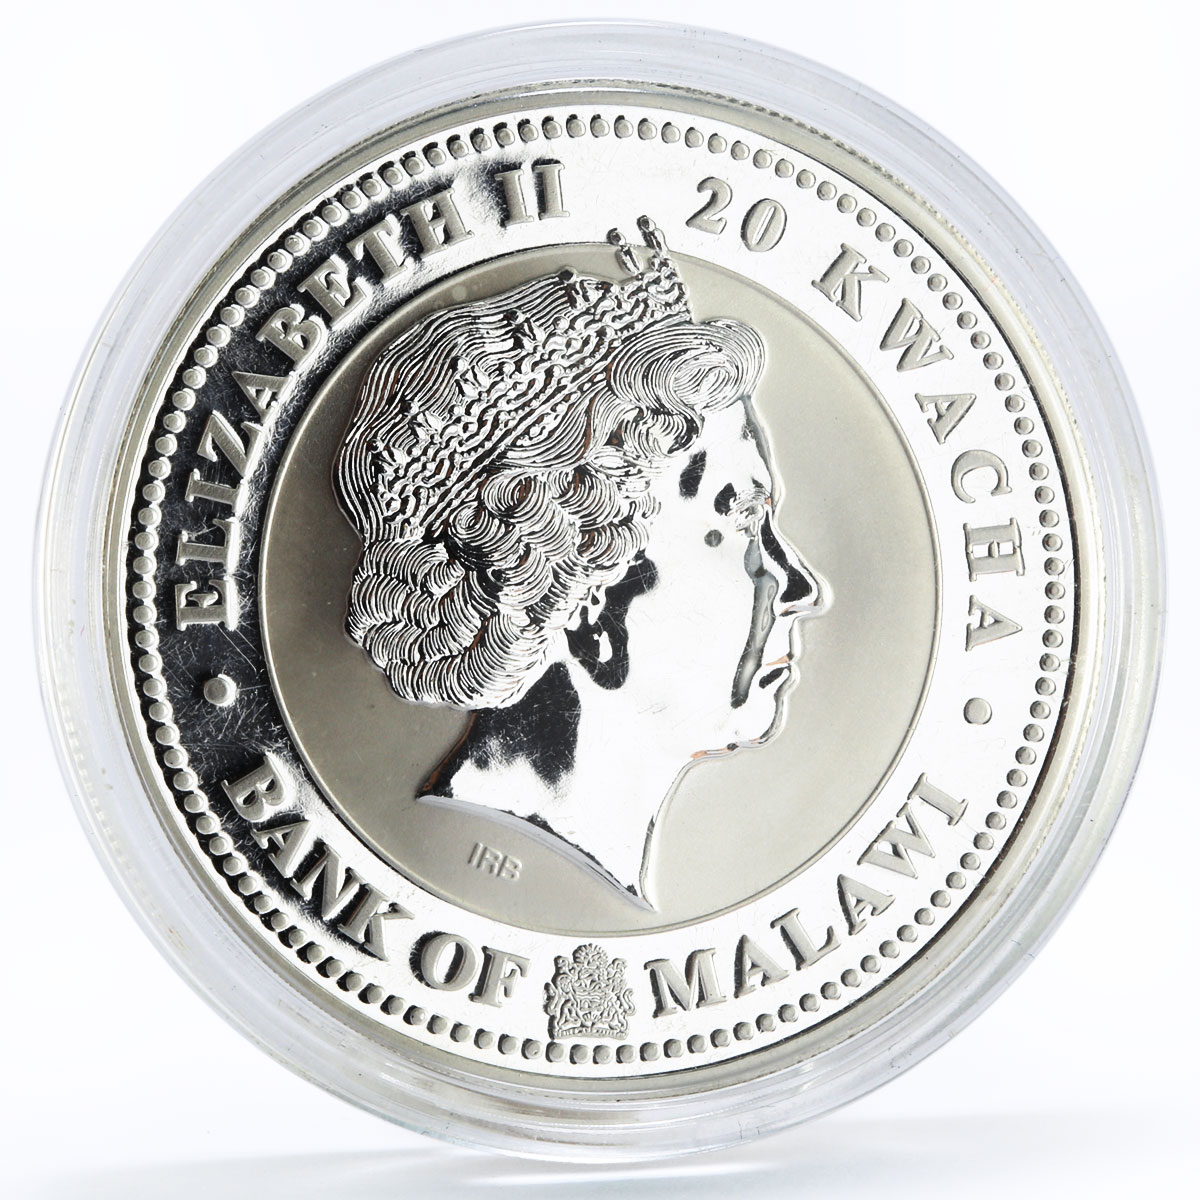 Malawi 20 kwacha Lunar Calendar series Year of the Ox silver coin 2009